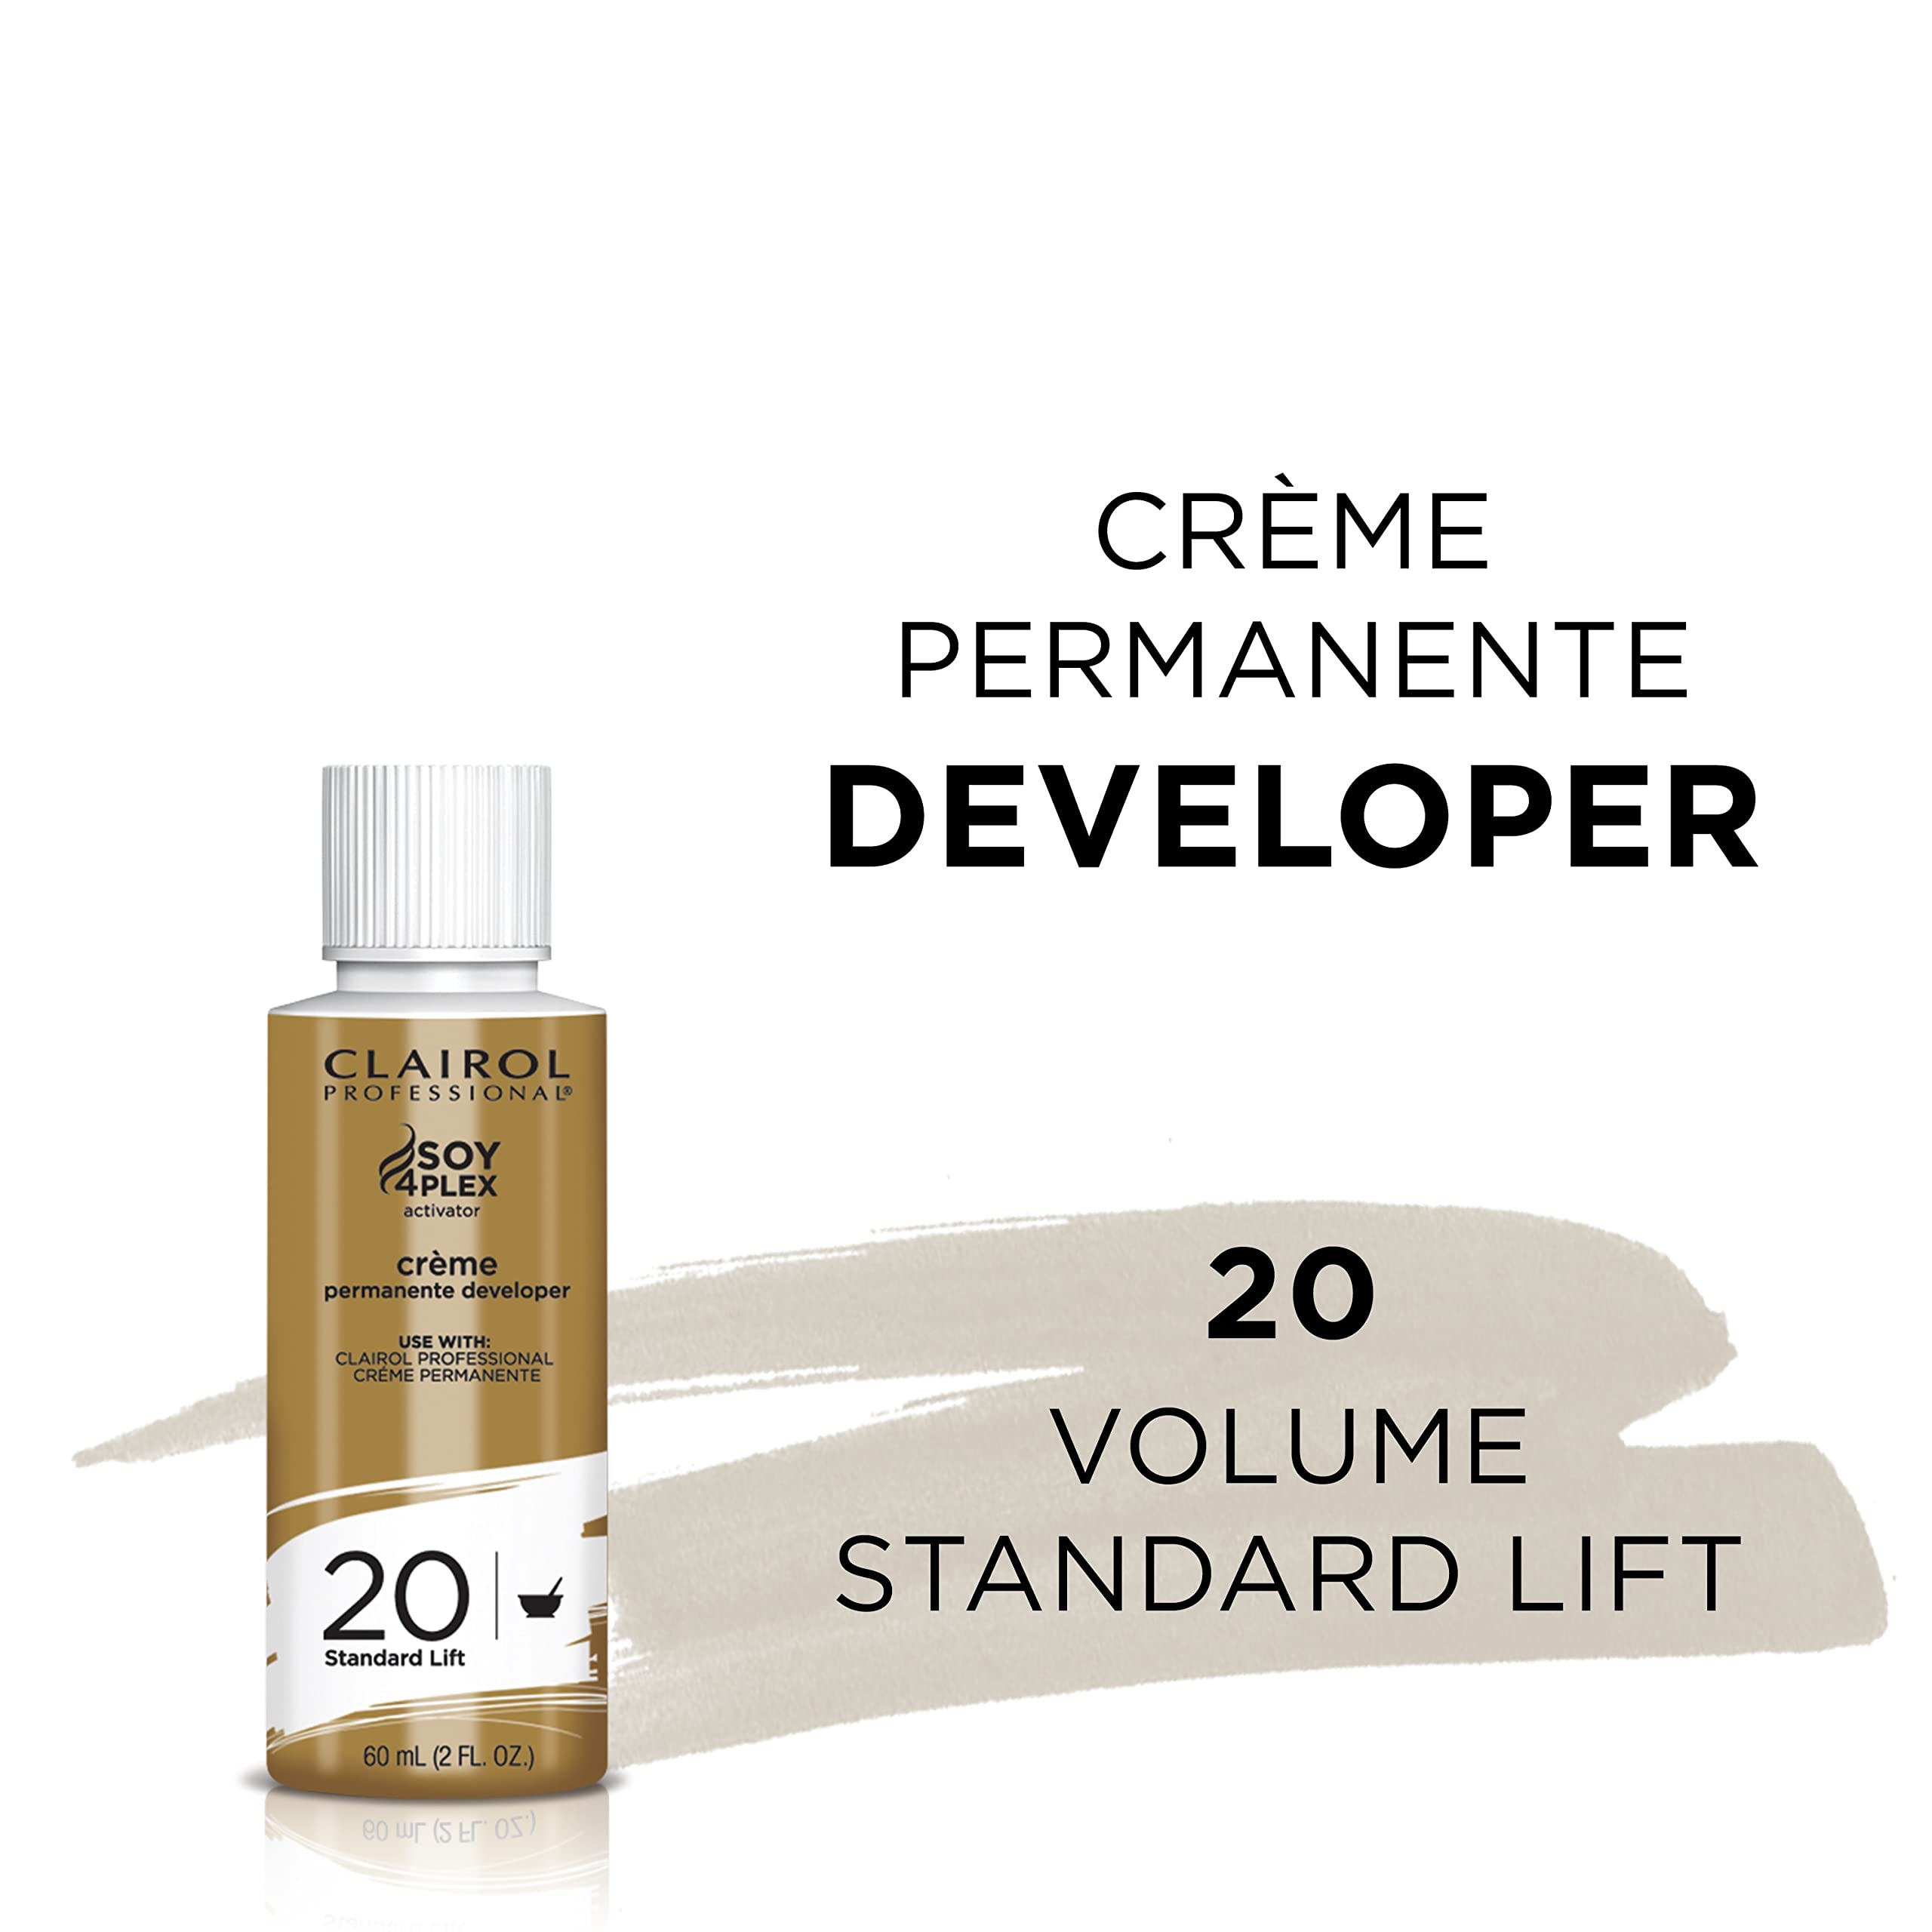 Clairol Professional Crème Demi Permanent 20 volume Hair Developer, 2 oz